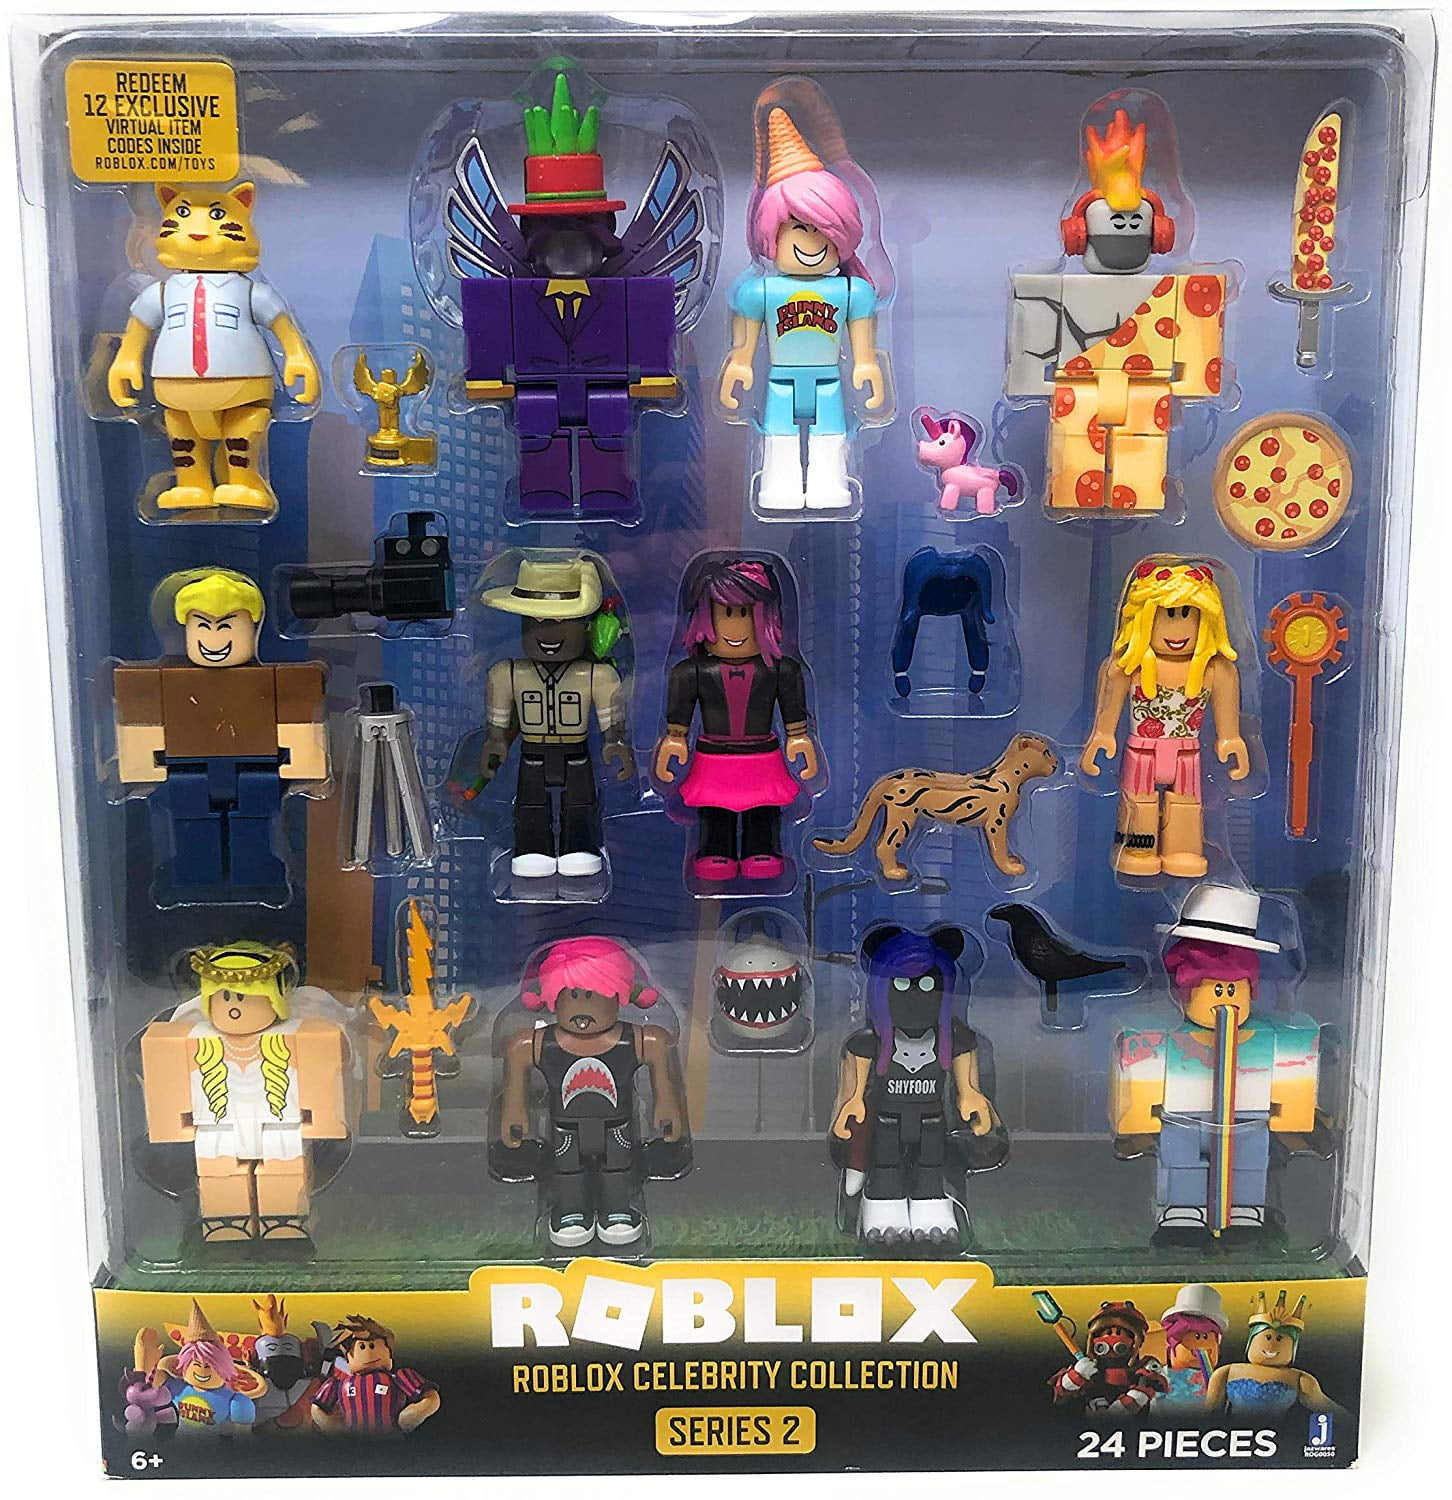 Roblox Series 2 Roblox Celebrity Collection 24 Piece Set Walmart Com Walmart Com - brand new with code box roblox series 2 celebrity ninja